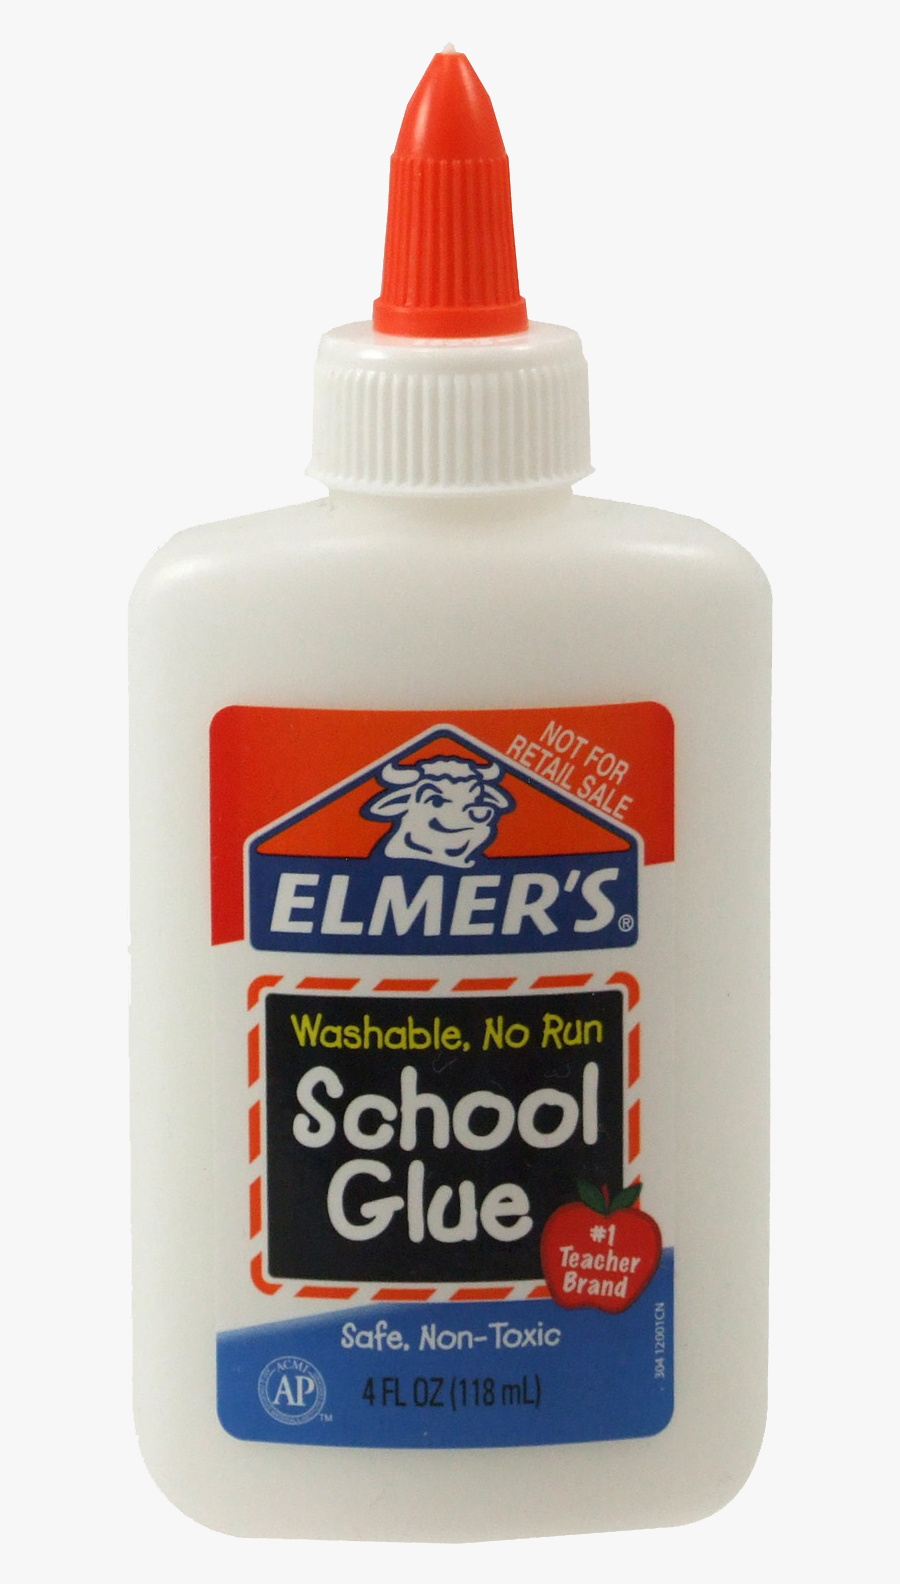 Pattern Transfer Fabric - Elmers White Glue Label, Transparent Clipart